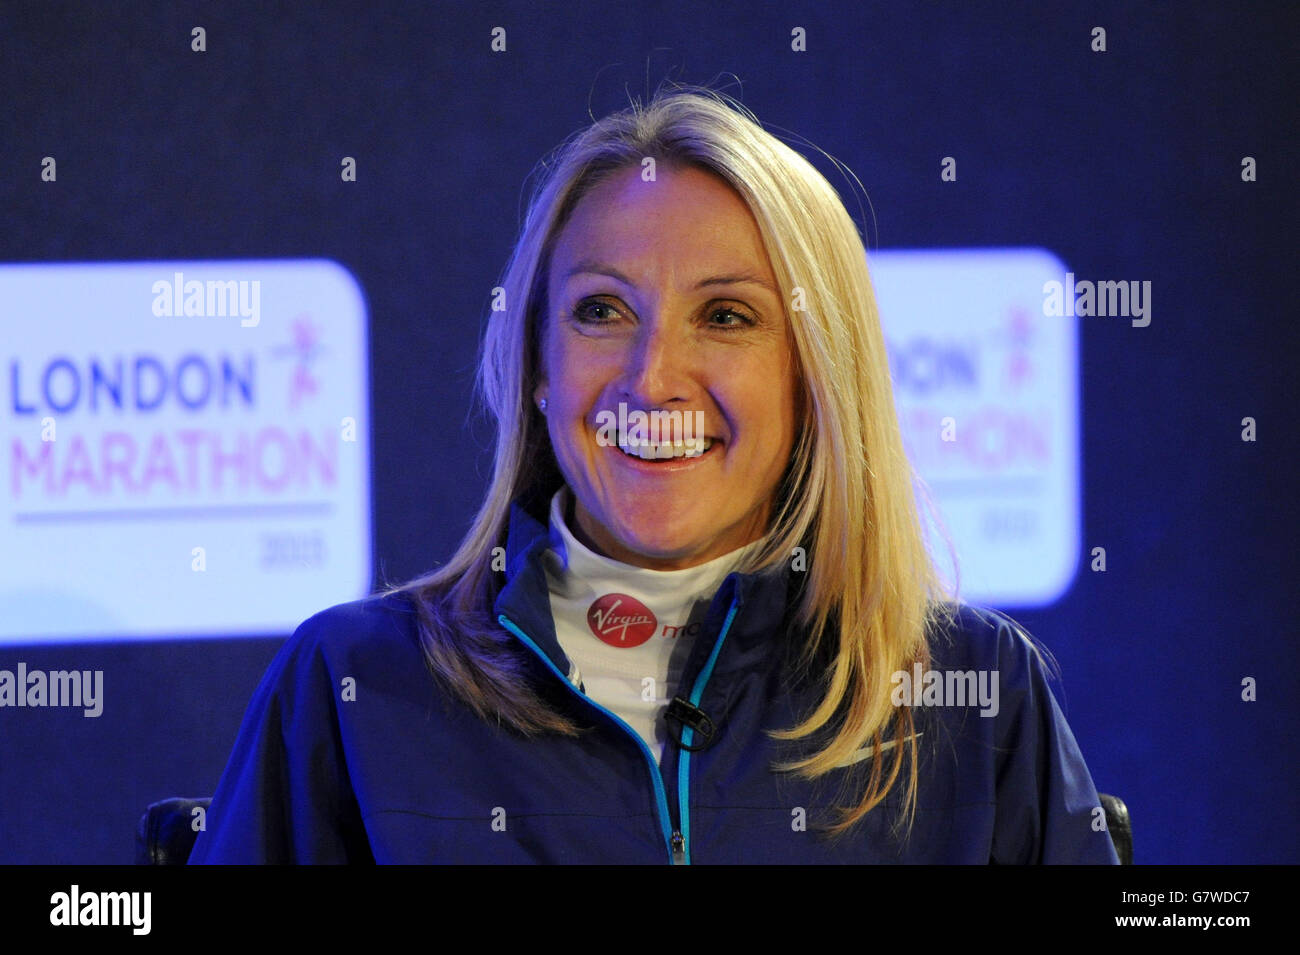 Leichtathletik - Virgin Money London Marathon 2015 - Paula Radcliffe Pressekonferenz und Photocall - Tower Hotel. Paula Radcliffe während einer Pressekonferenz vor dem Virgin Money London Marathon 2015 im Tower Hotel, London. Stockfoto